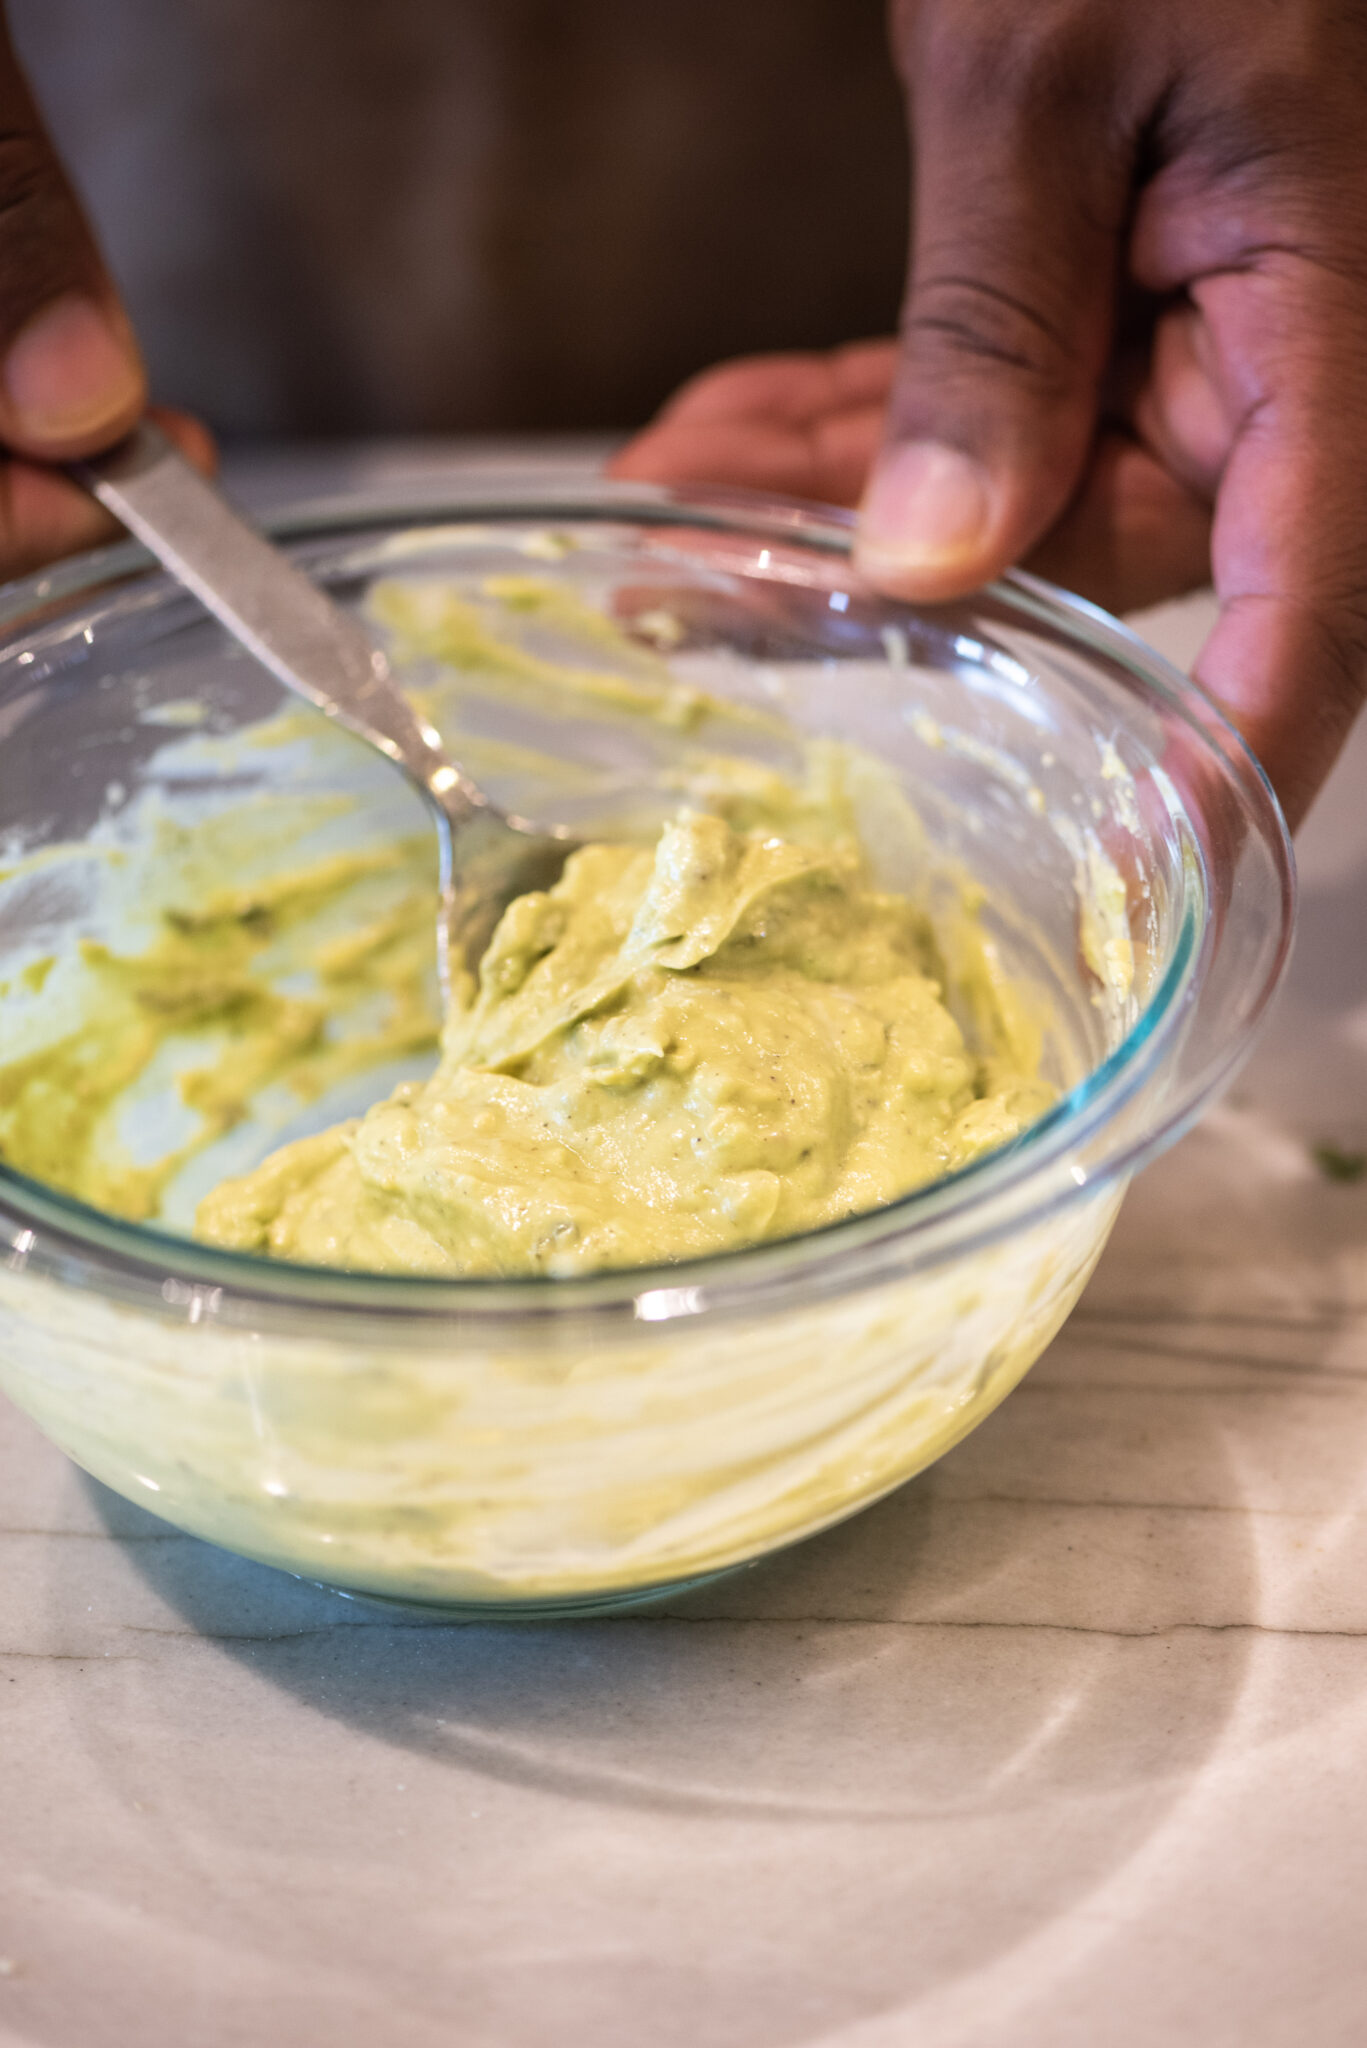 Making the avocado cream sauce